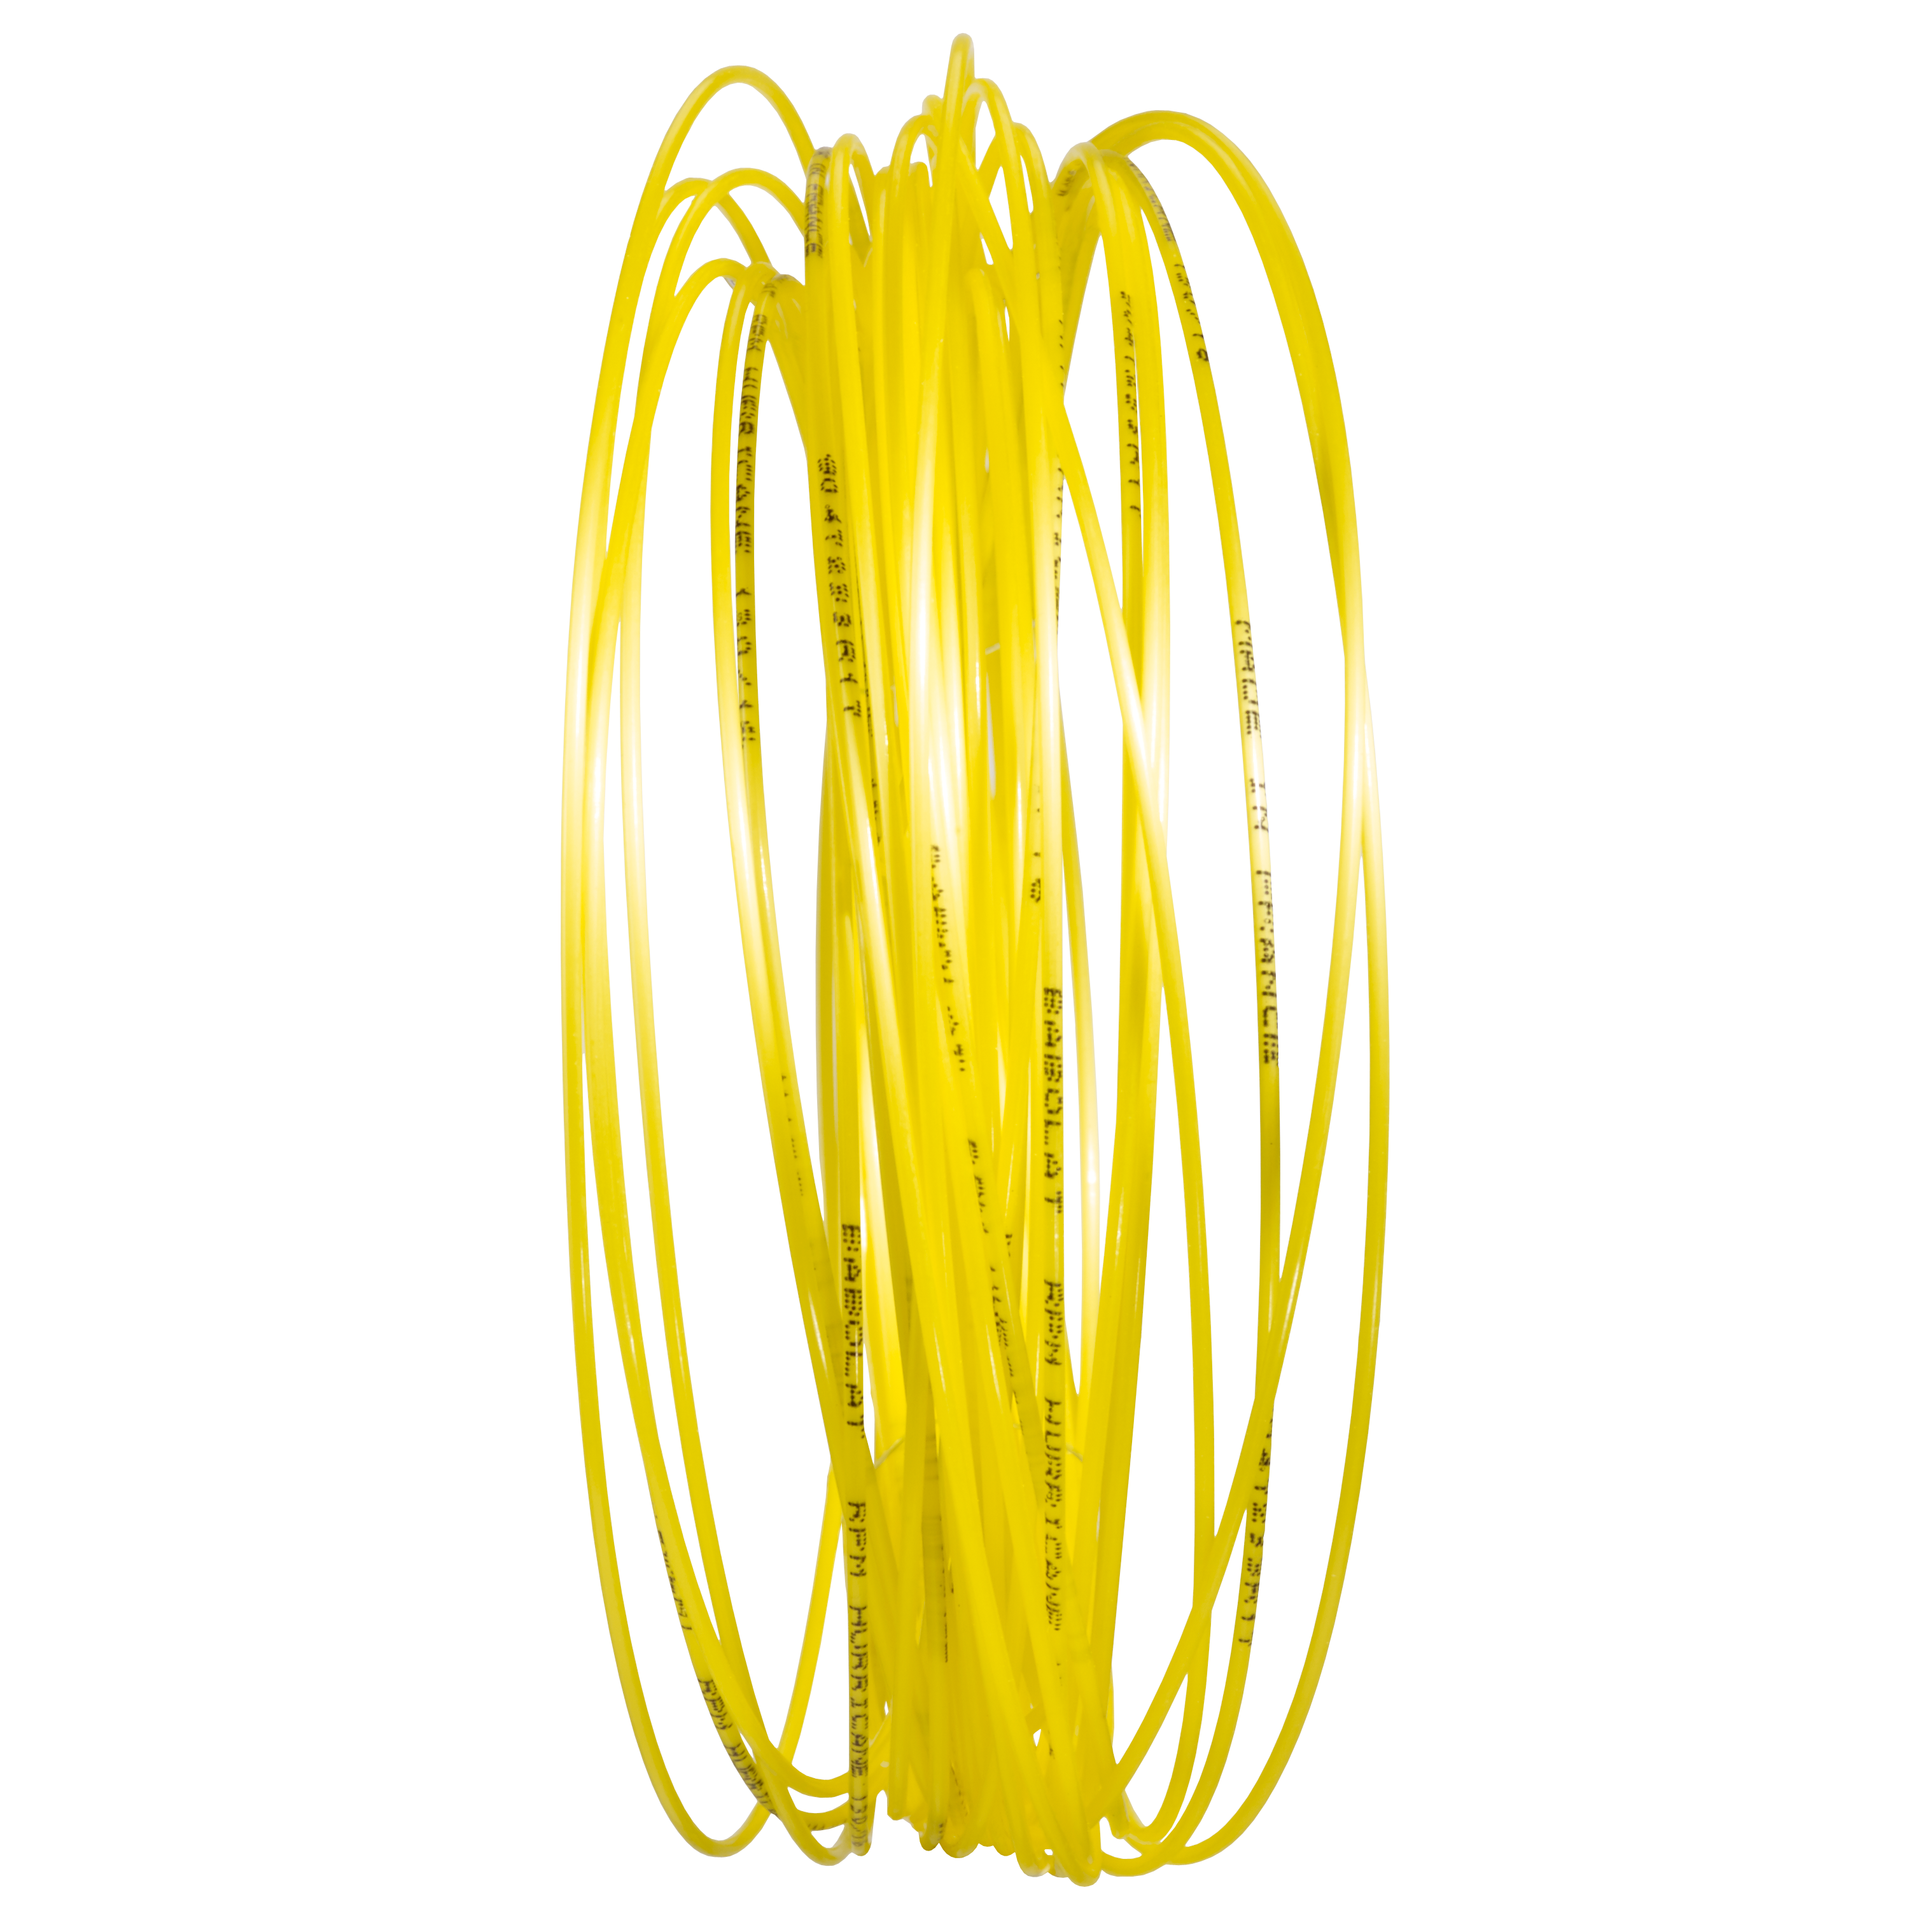 RPM Rough 12 Meter Yellow Tennis String